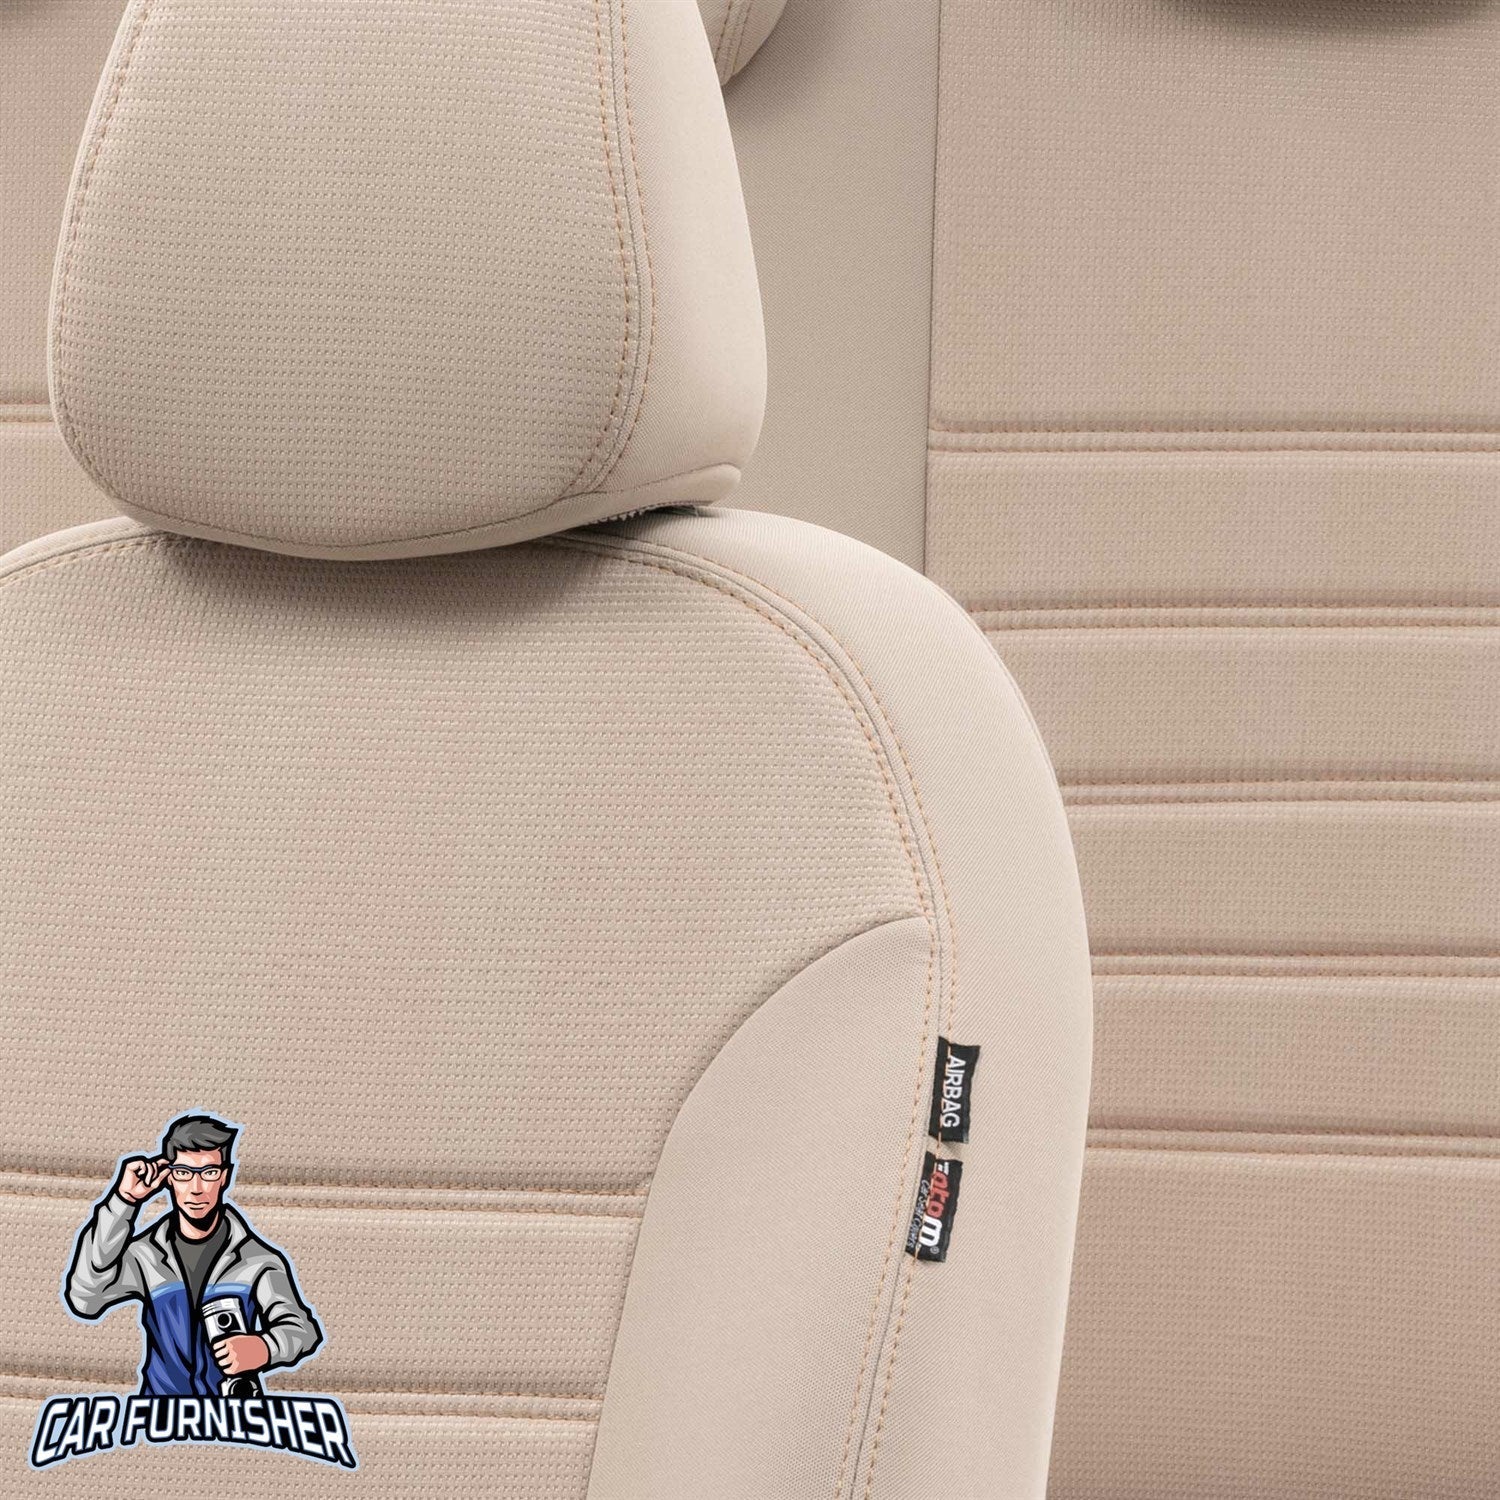 Proton Gen-2 Seat Covers Original Jacquard Design Beige Jacquard Fabric